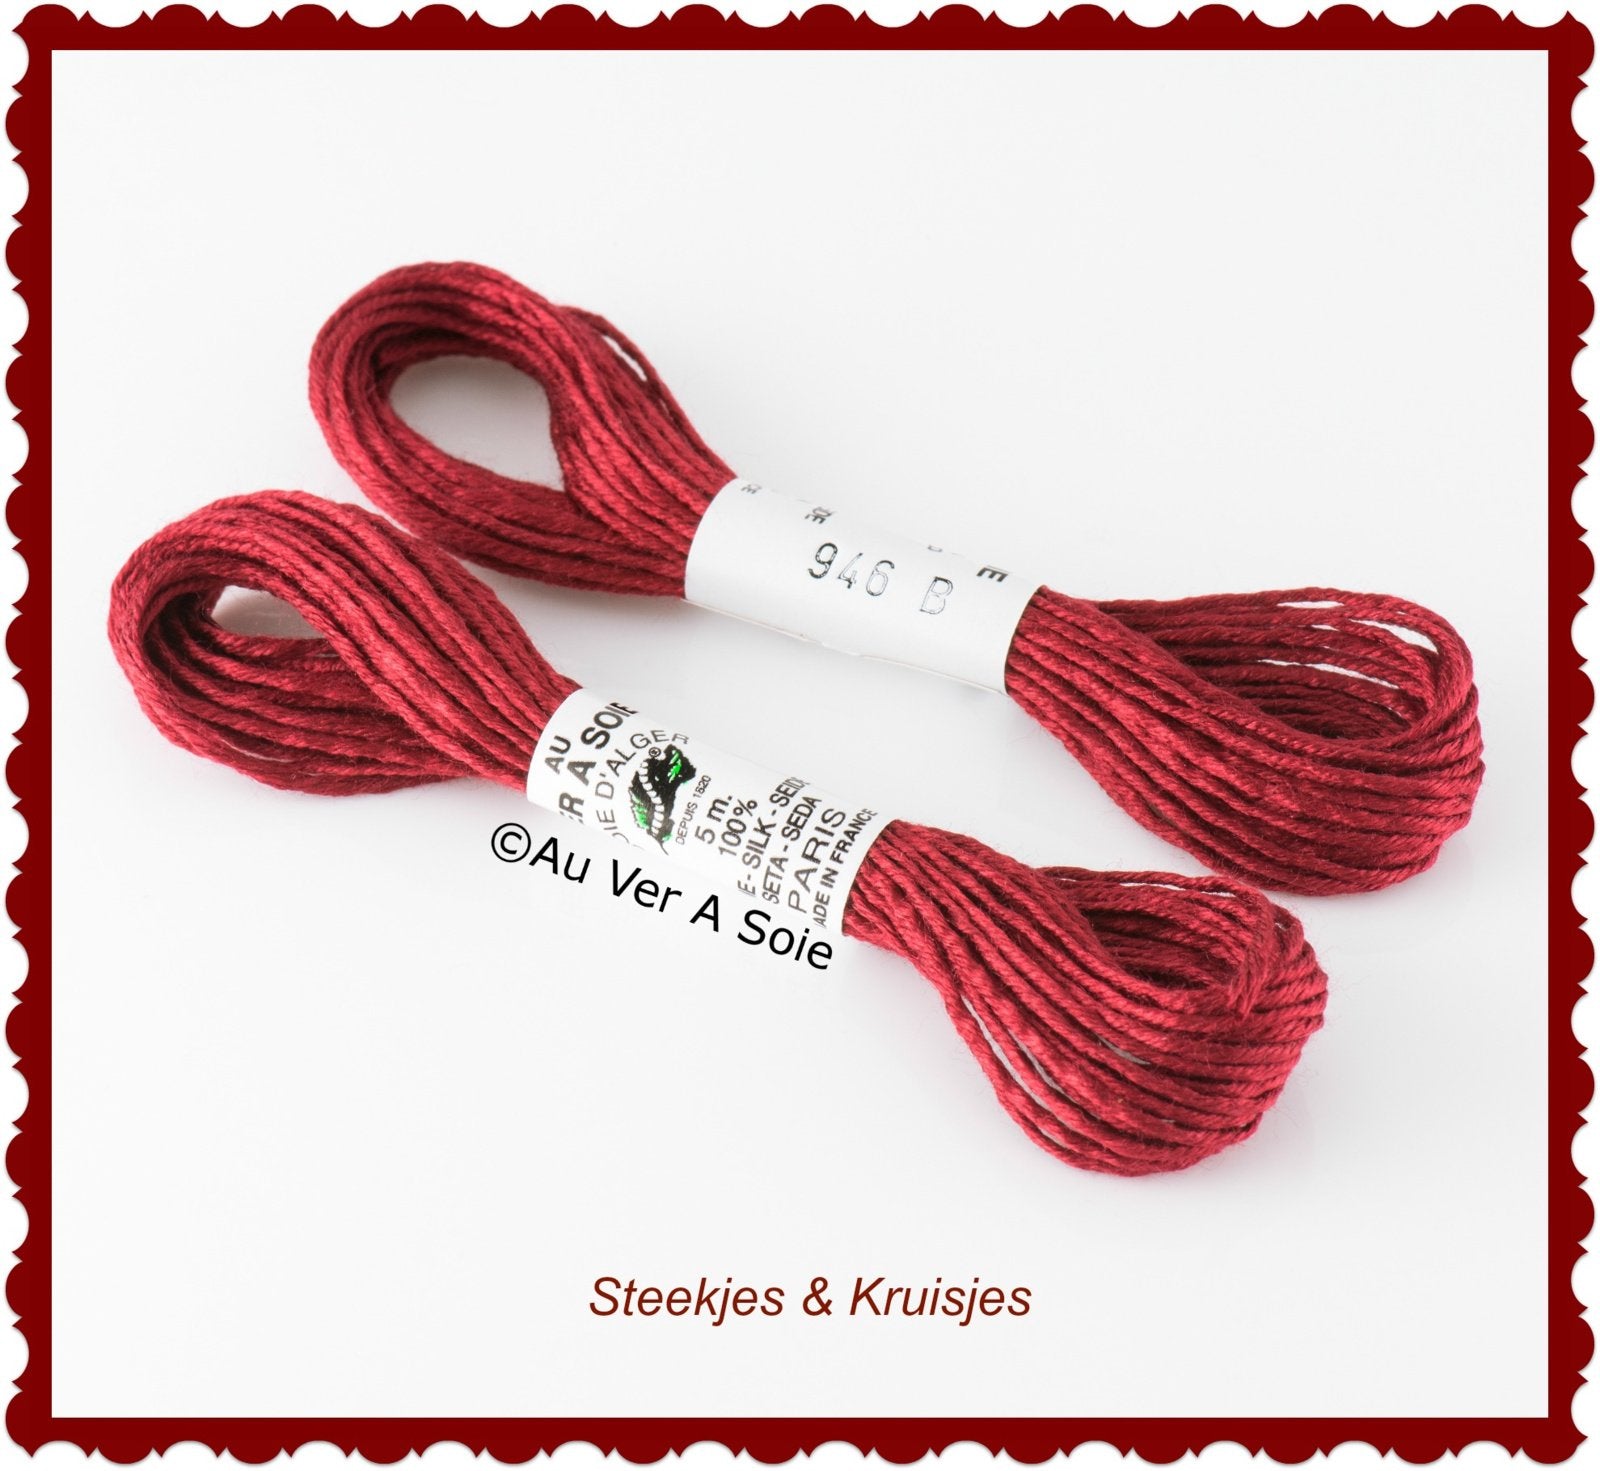 Au ver ie "soie d'alger" silk yarn color no. 946